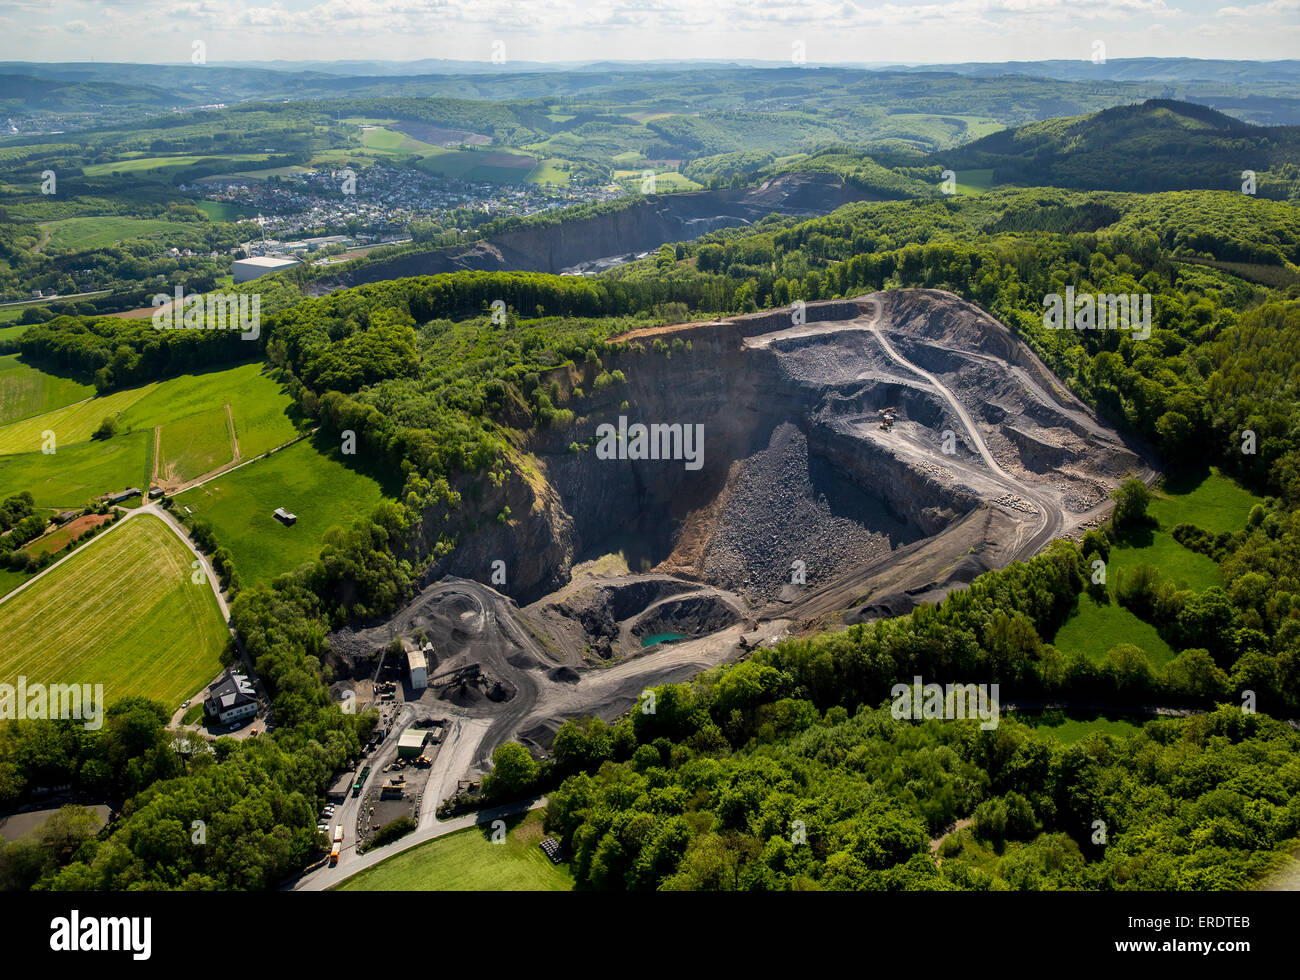 Limestone mining, developing area below the quarry Herdringen quarry Ebel, Arnsberg, Sauerland, North Rhine-Westphalia, Germany Stock Photo